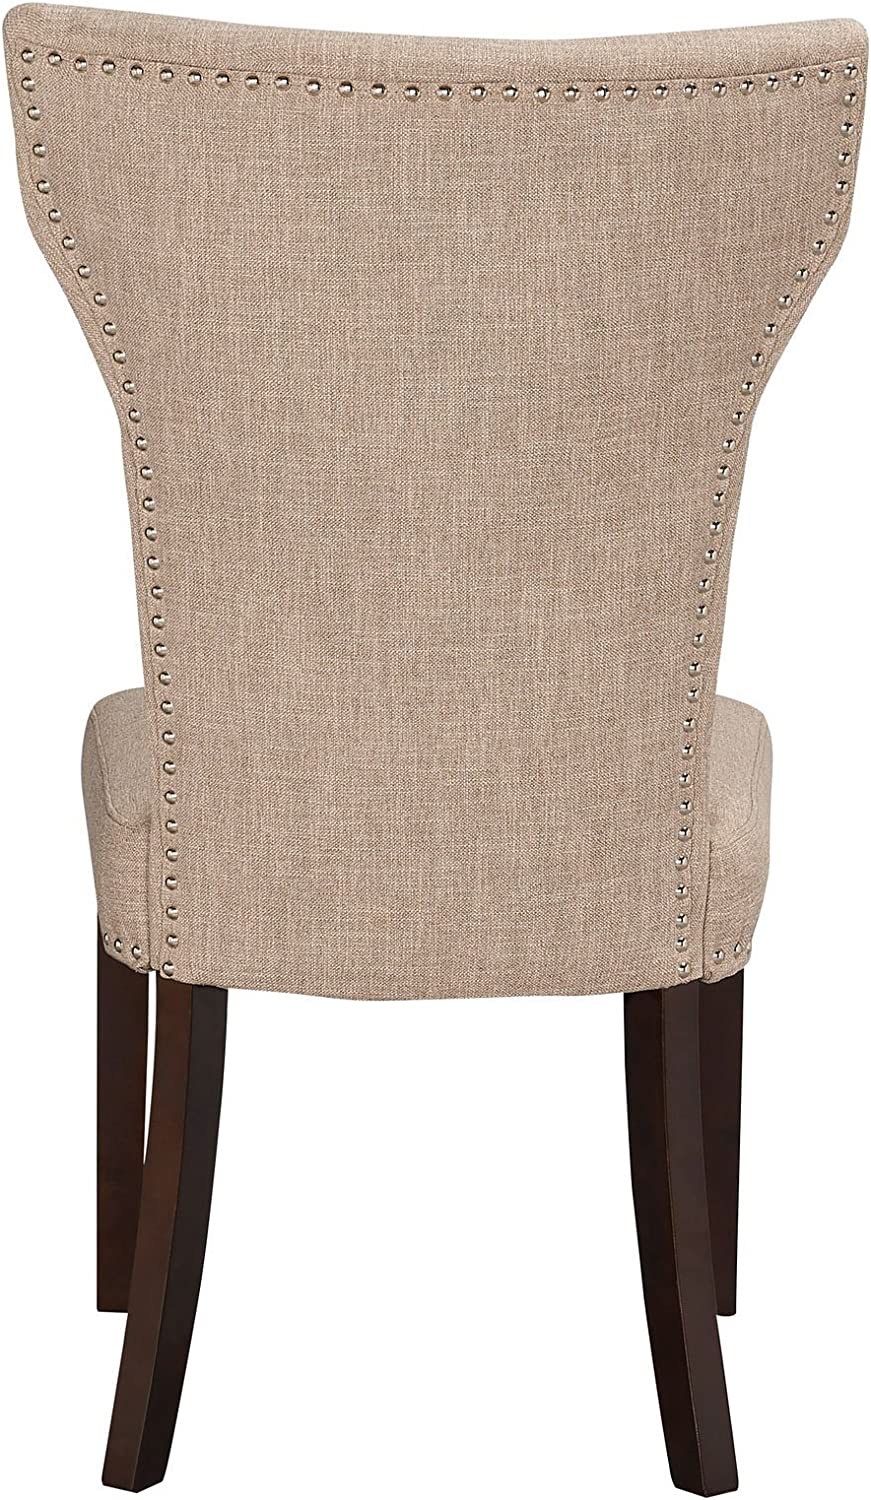 Boraam Monaco Parsons Dining Chair - Set of 2 - Steel Gray